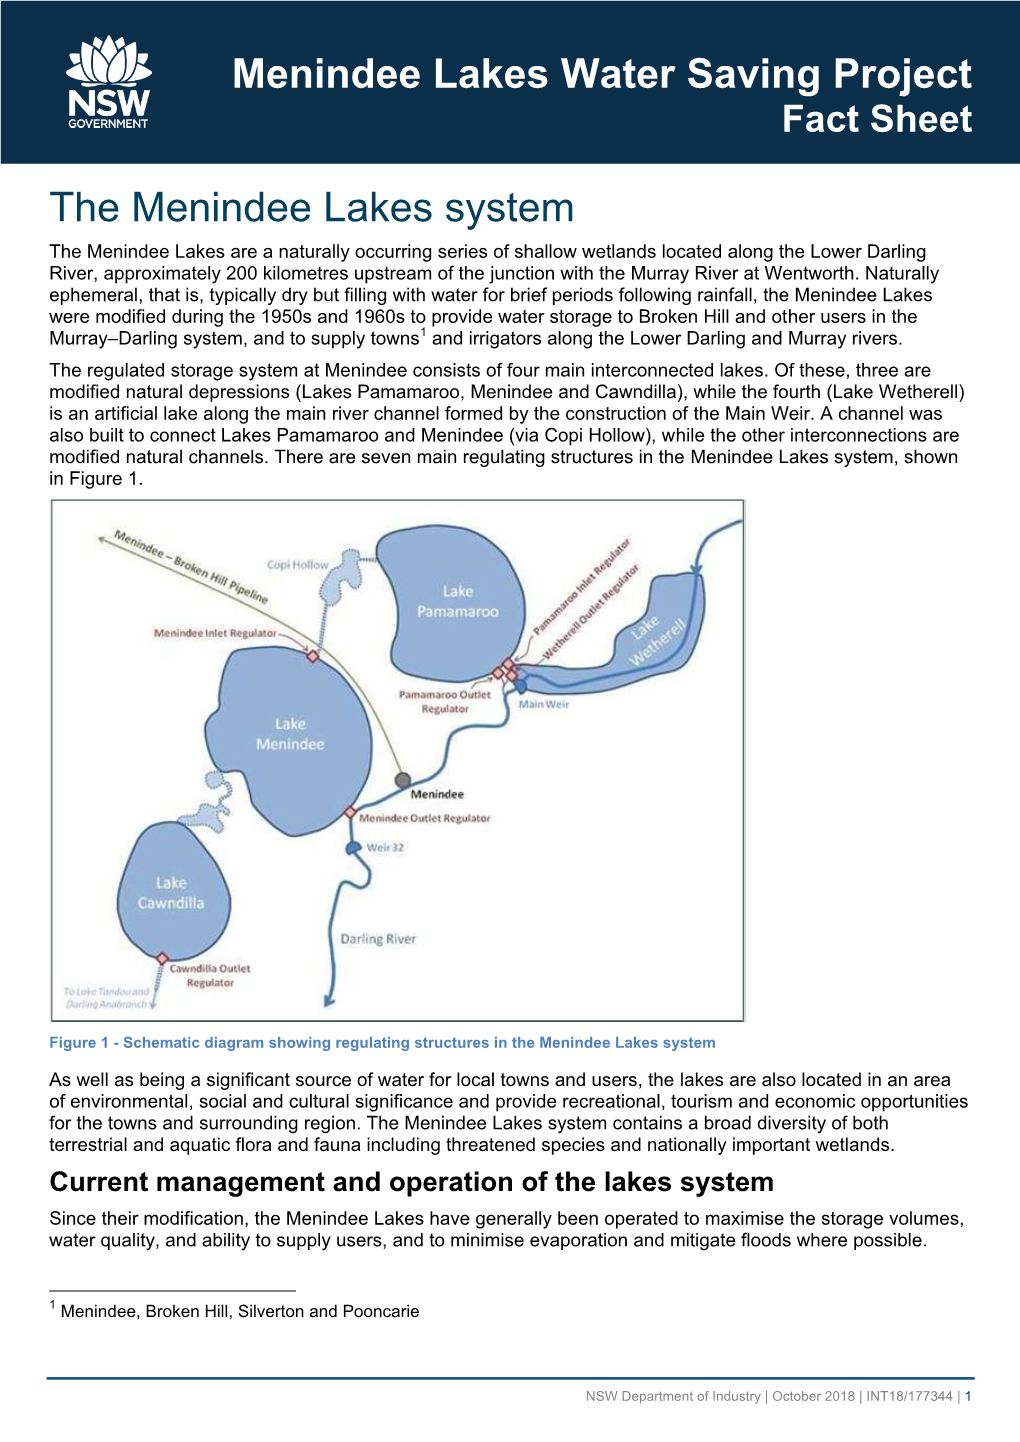 The Menindee Lakes System—Fact Sheet